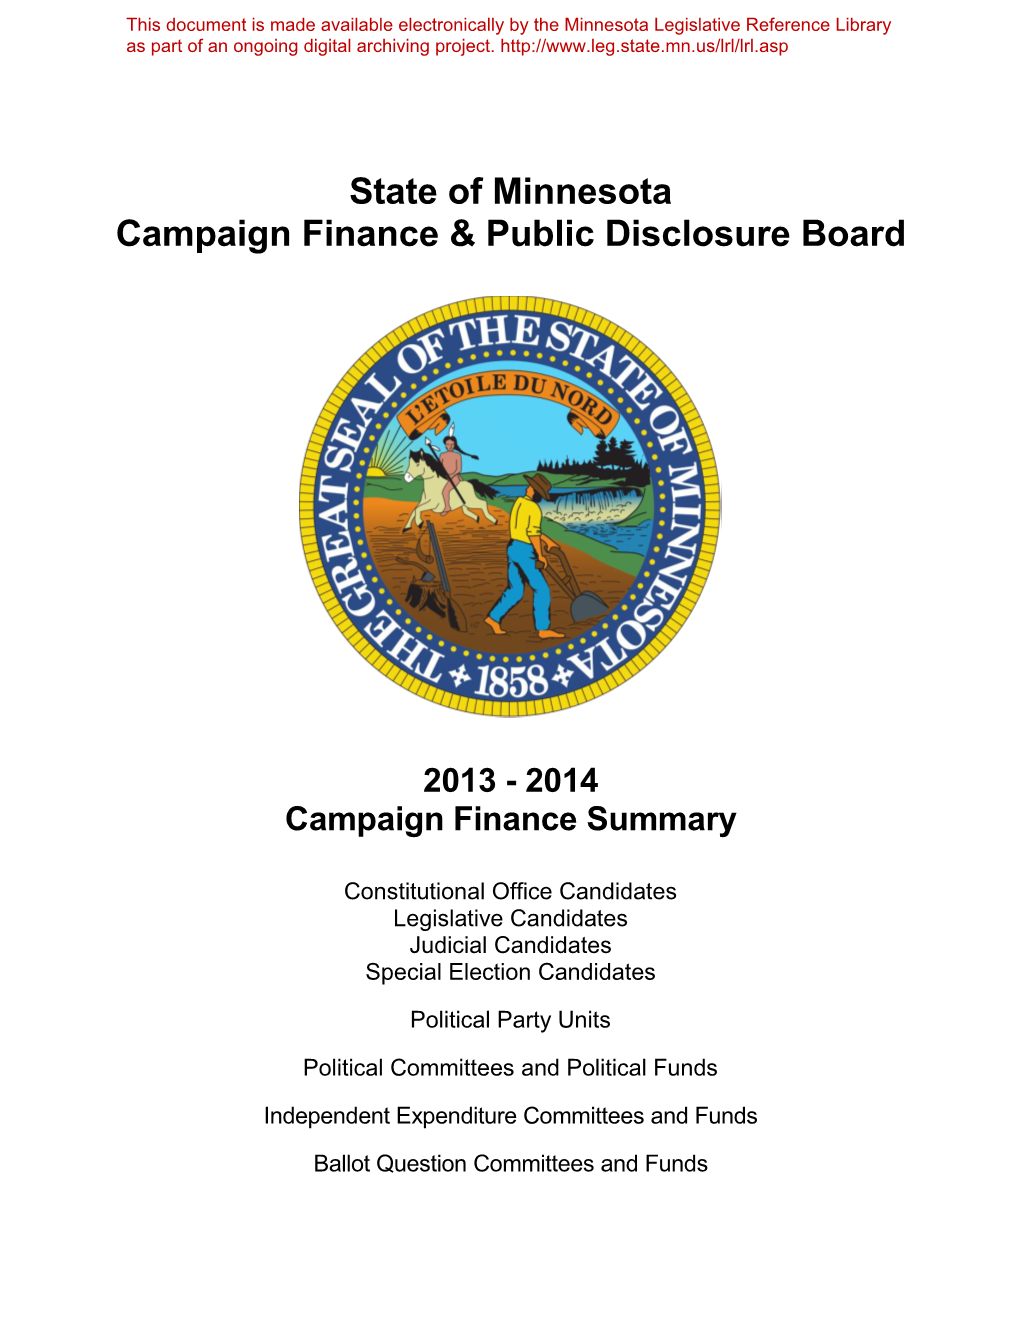 State of Minnesota Campaign Finance & Public Disclosure Board